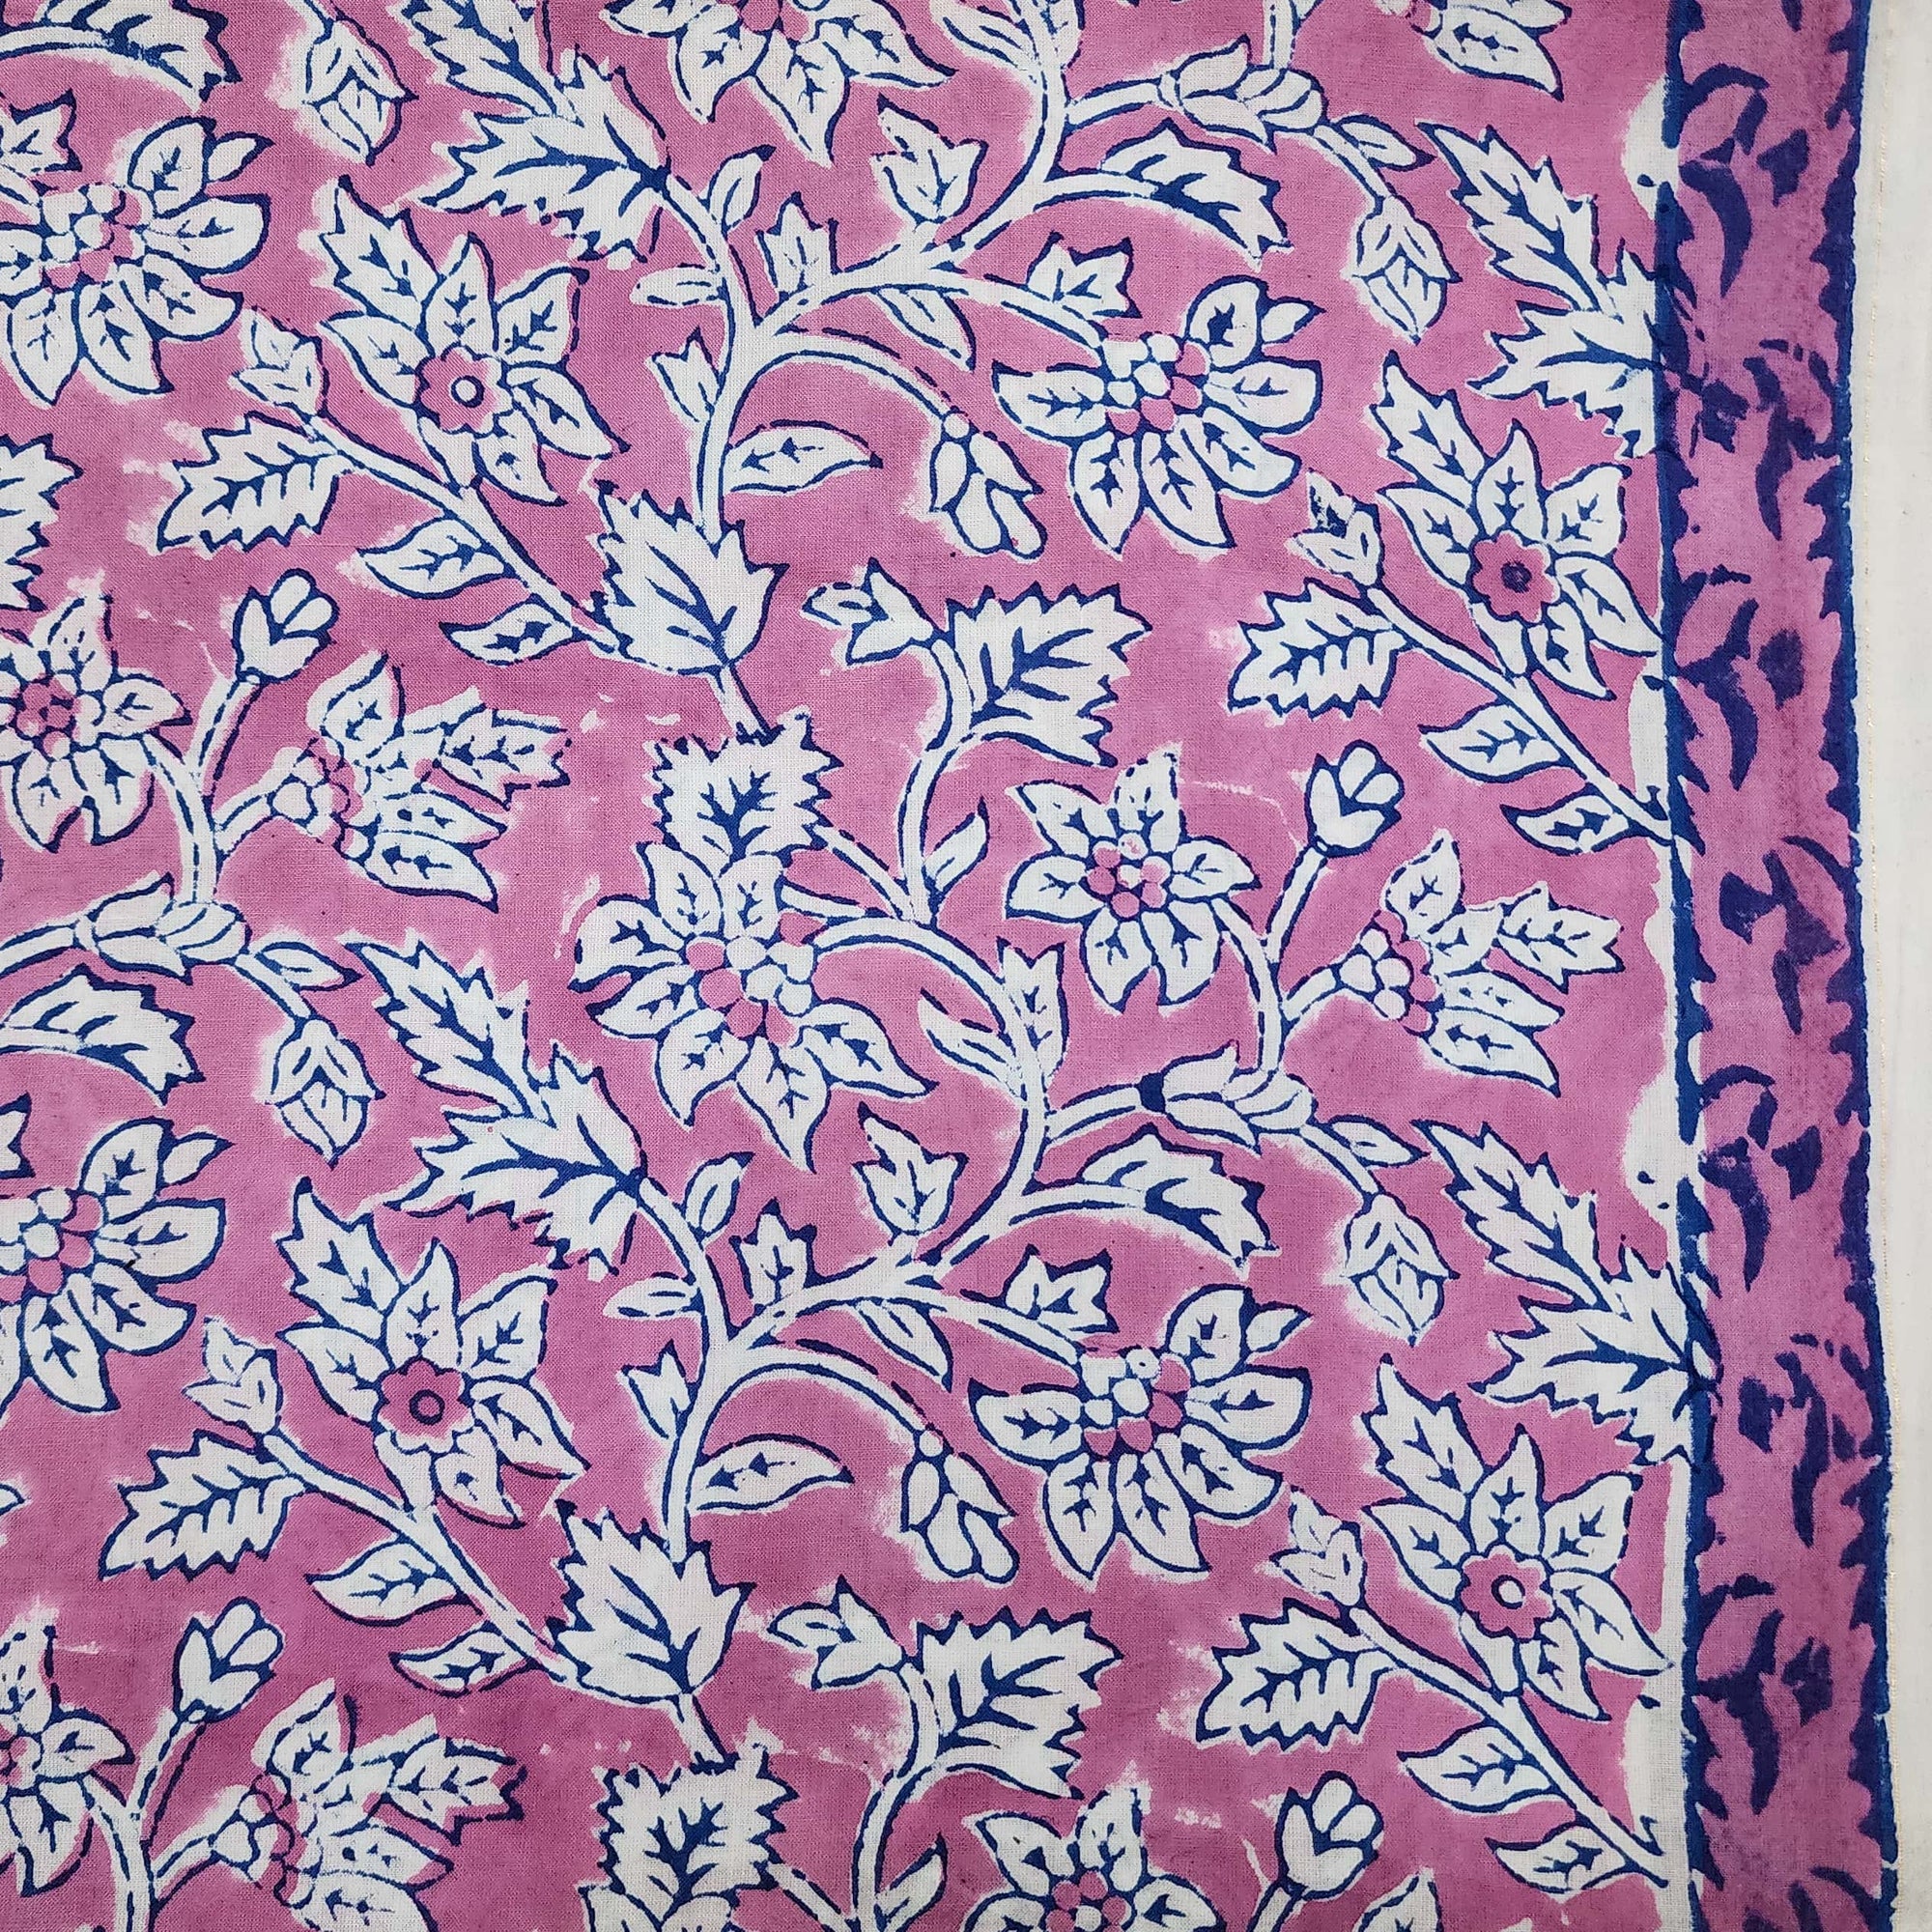 Floral Print Fabric at Rs 120/meter, Mahadev Nagar, Jaipur